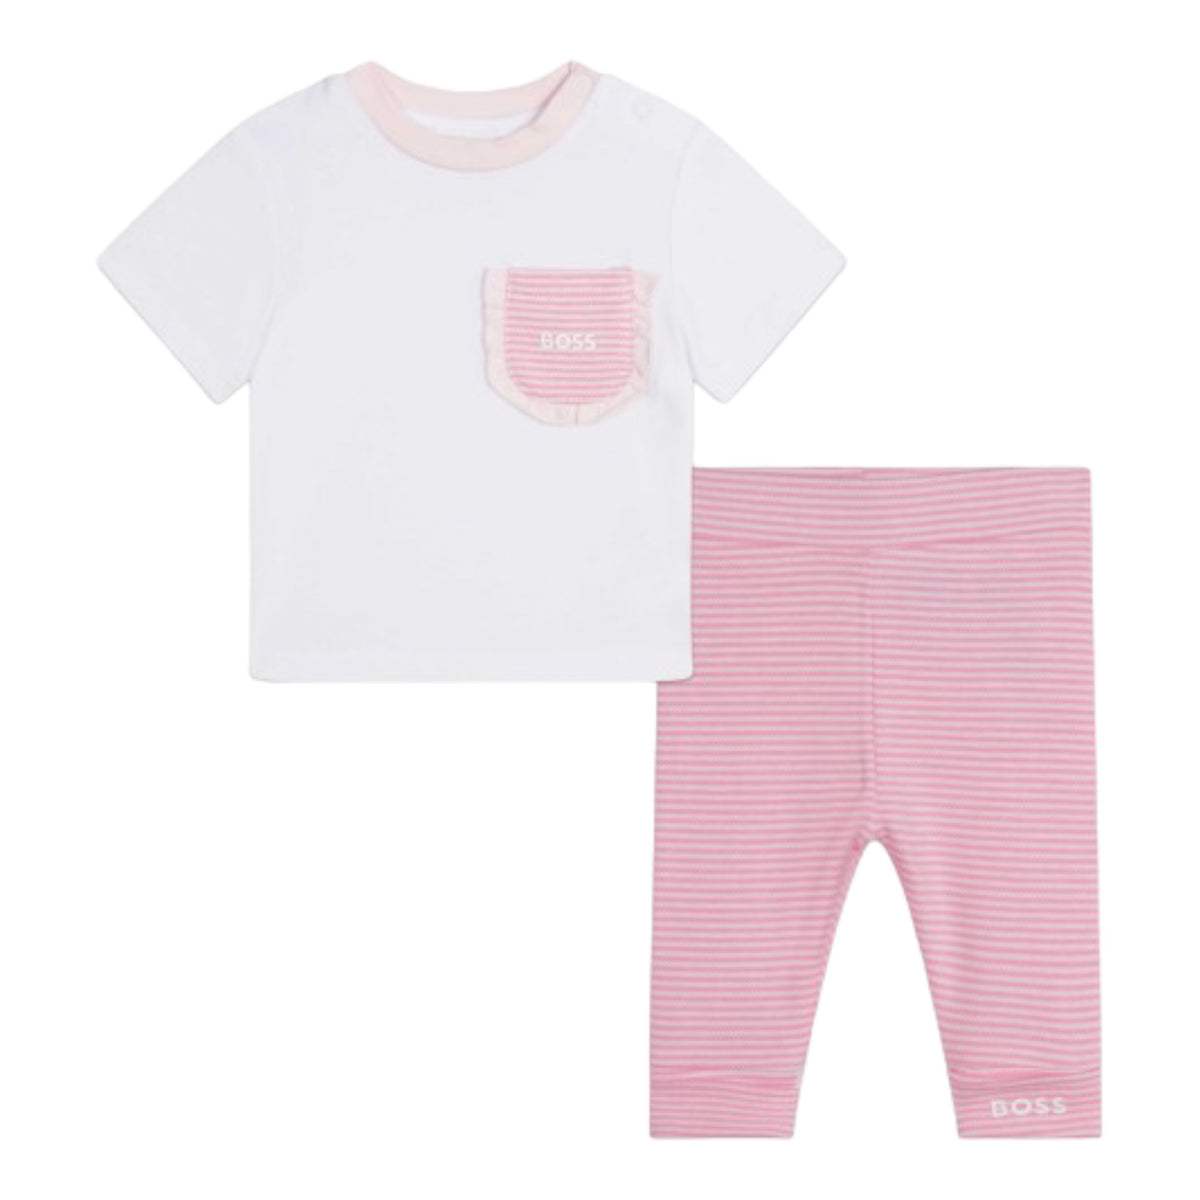 Hugo Boss Kids Girl's Toddler Girls T-Shirt and Pants Set